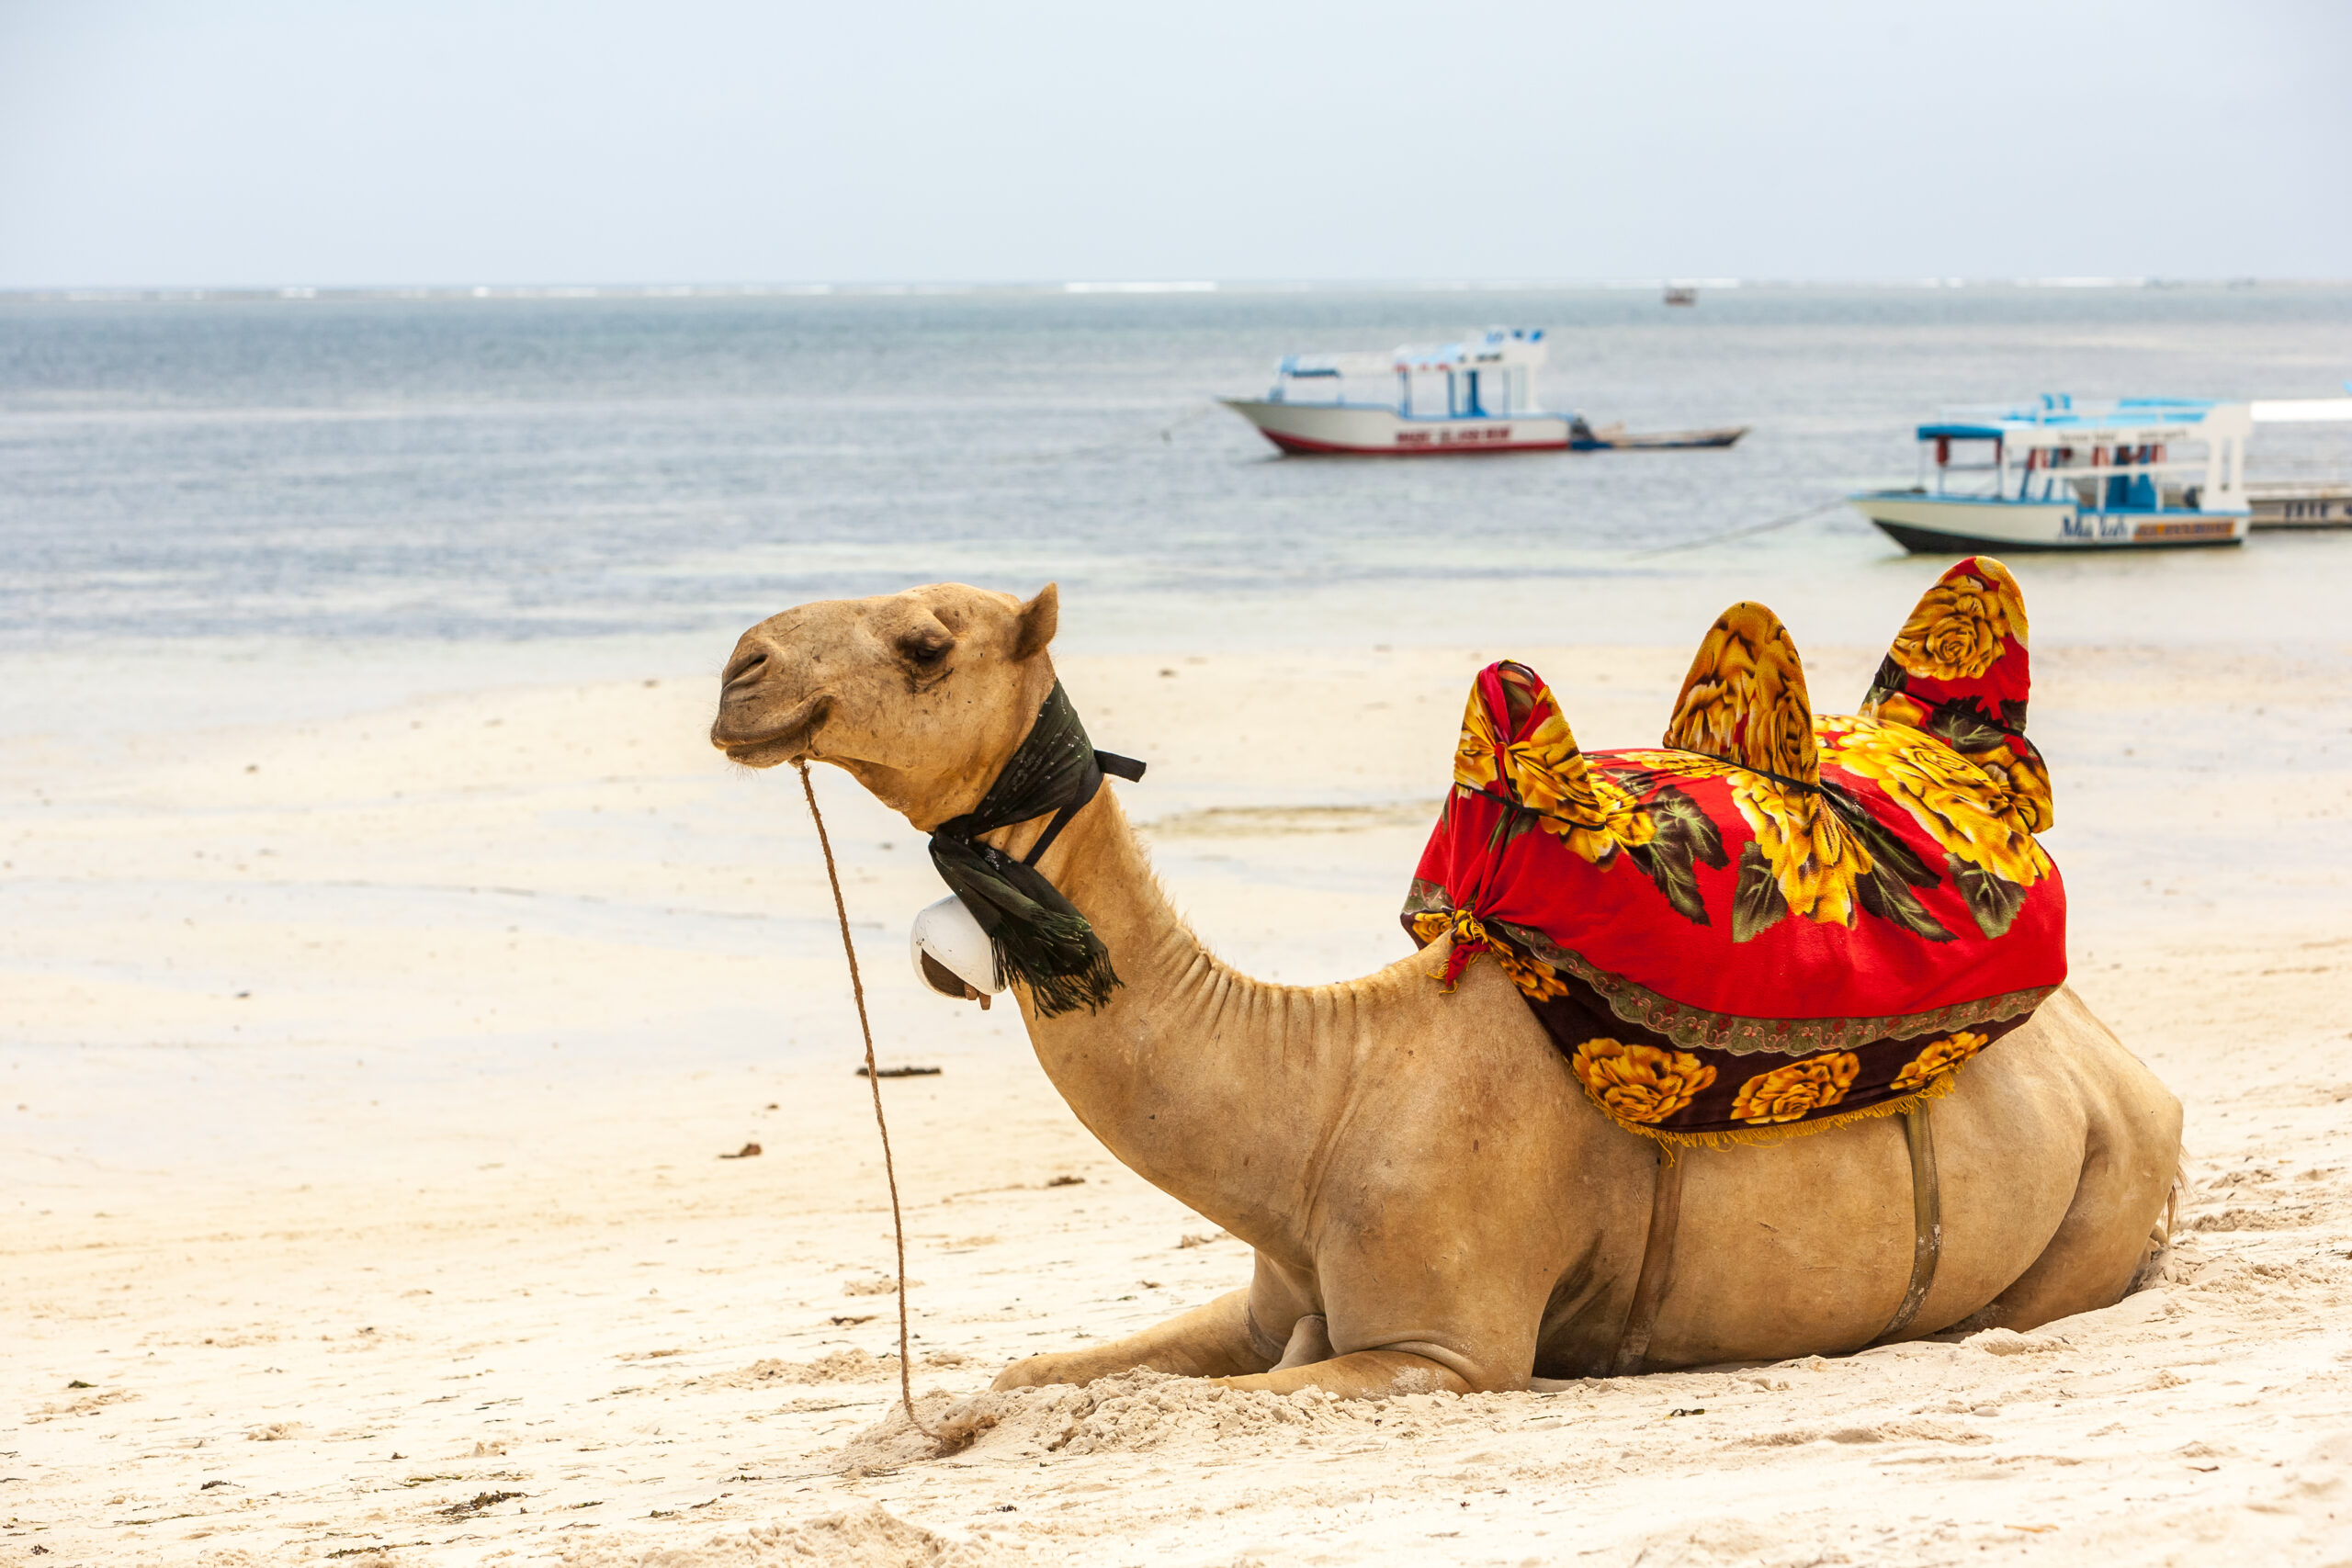 How to reach bikaner camel fair